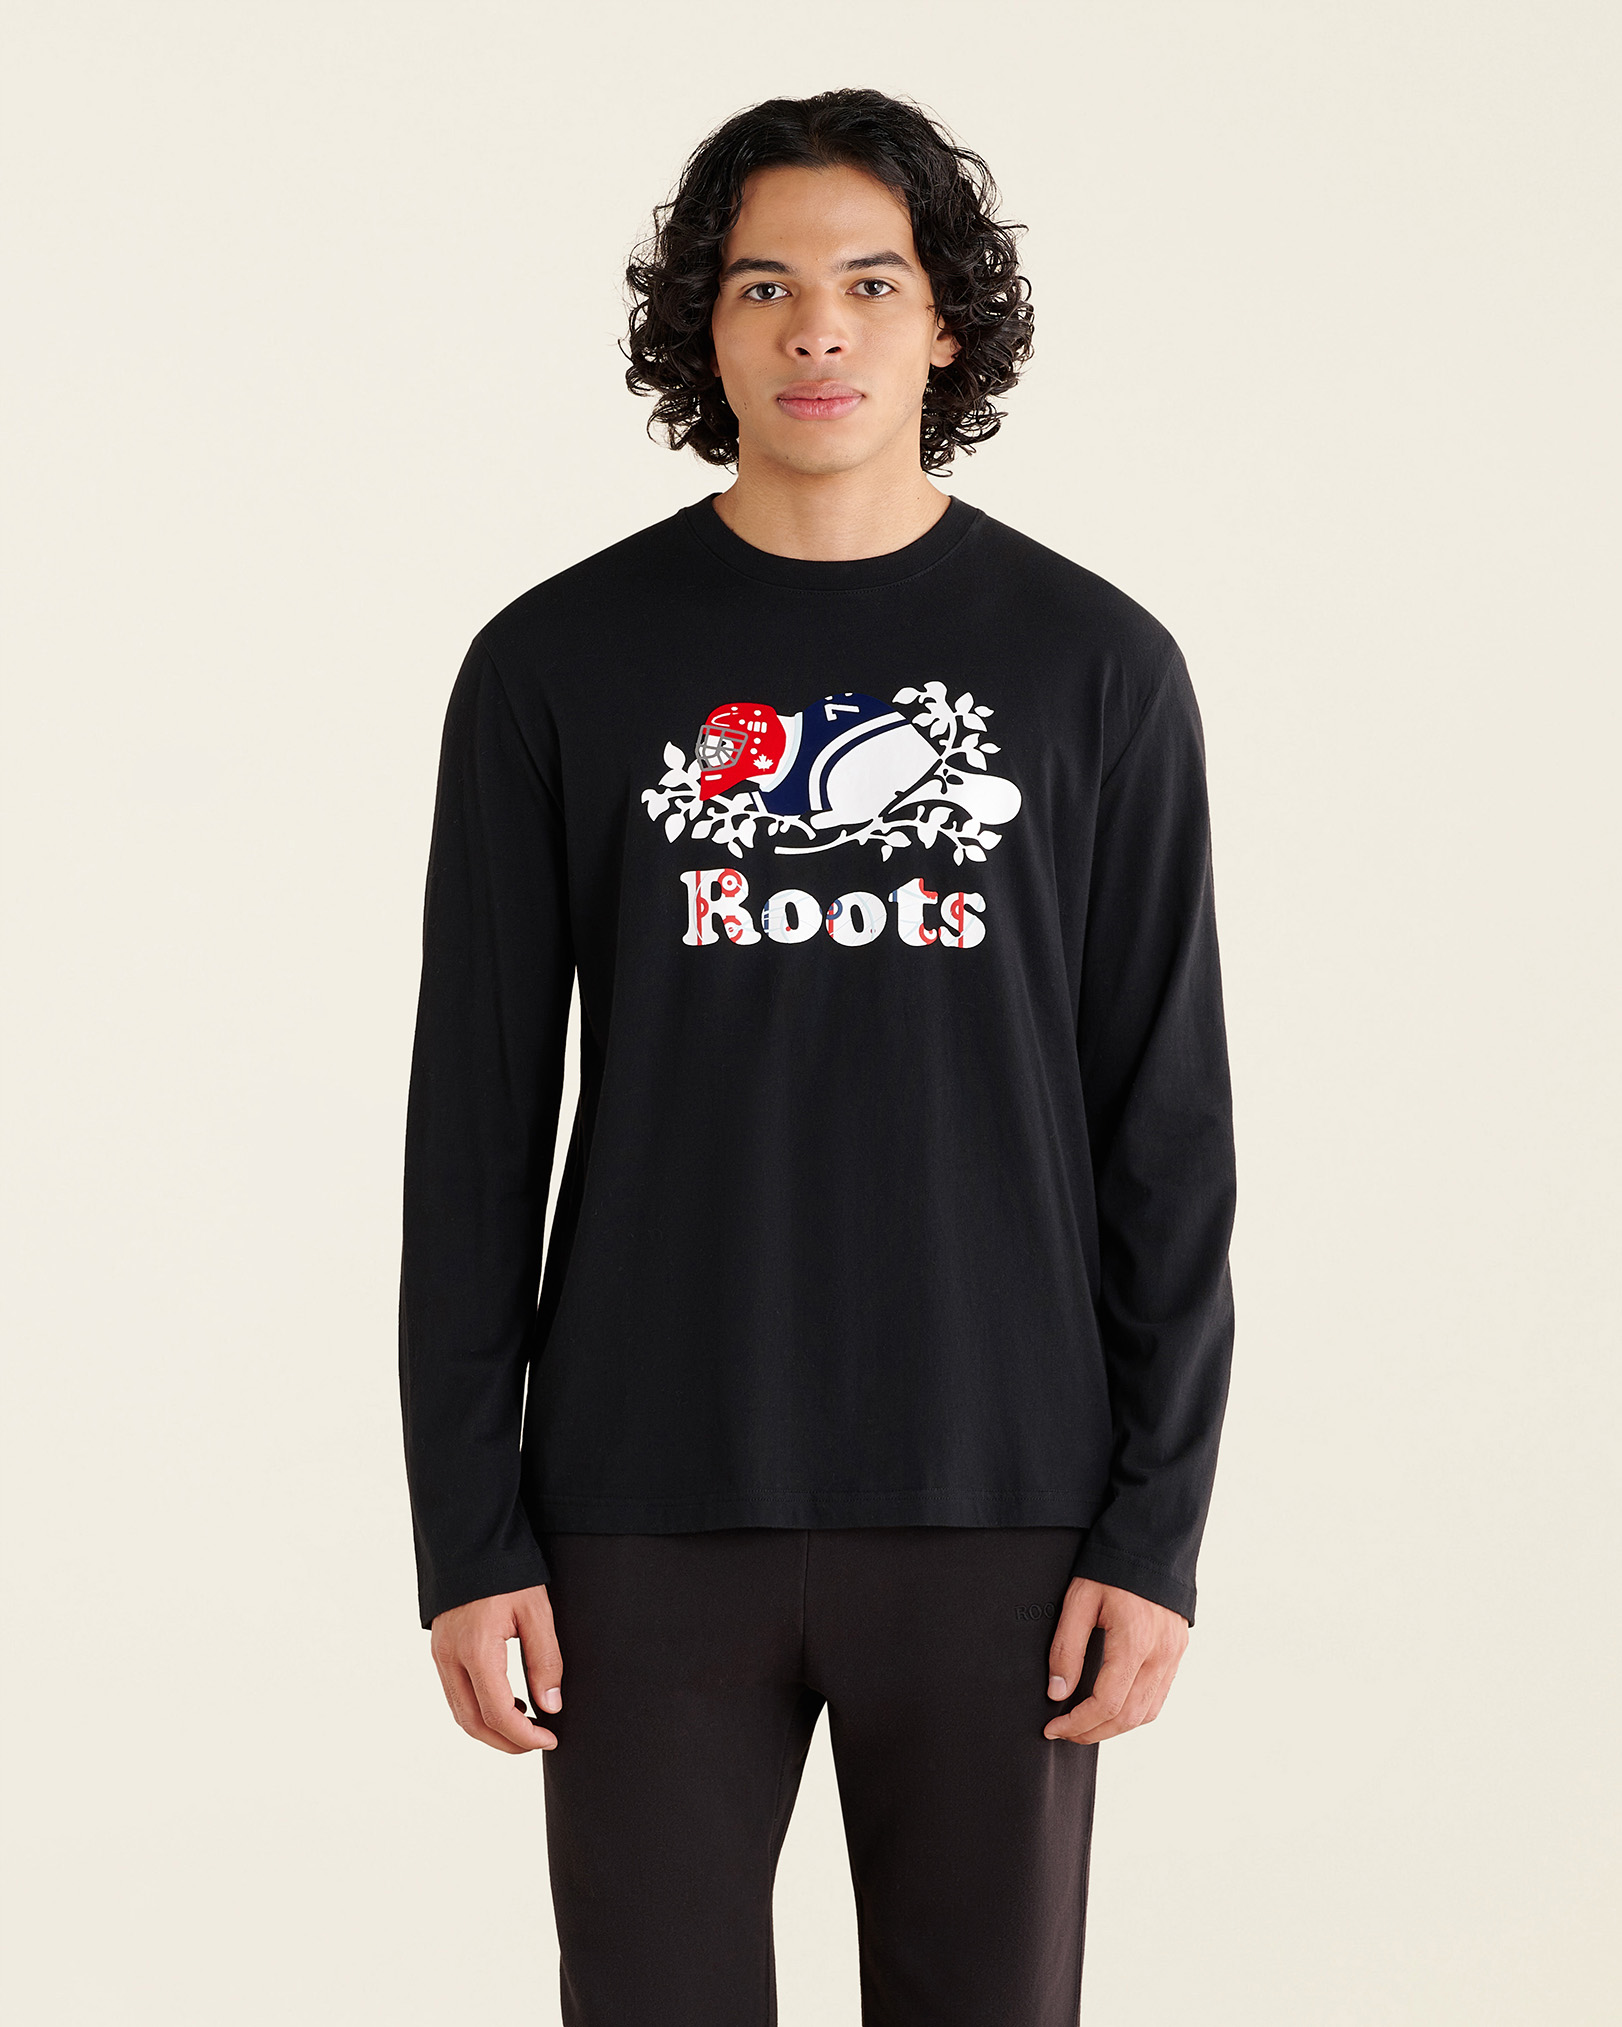 Roots Men's Winter Cooper Long Sleeve T-Shirt in Black